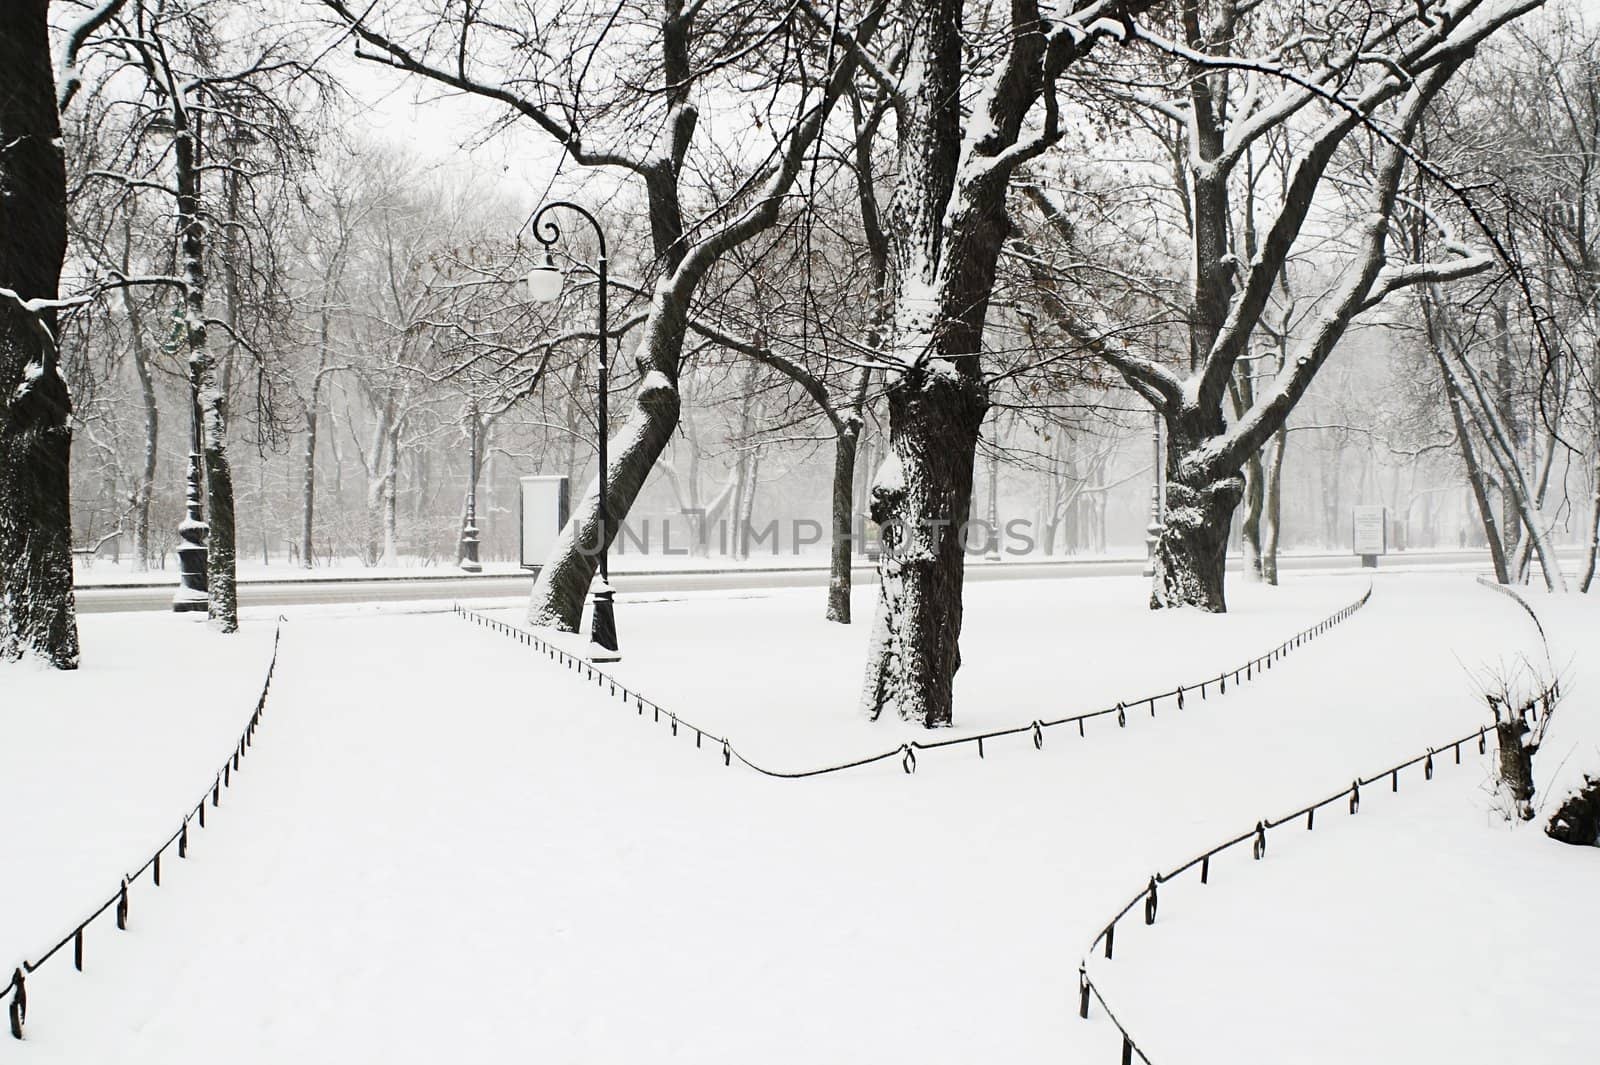 Alexandriyski park at snowfall in Saint Petersburg, Russia.